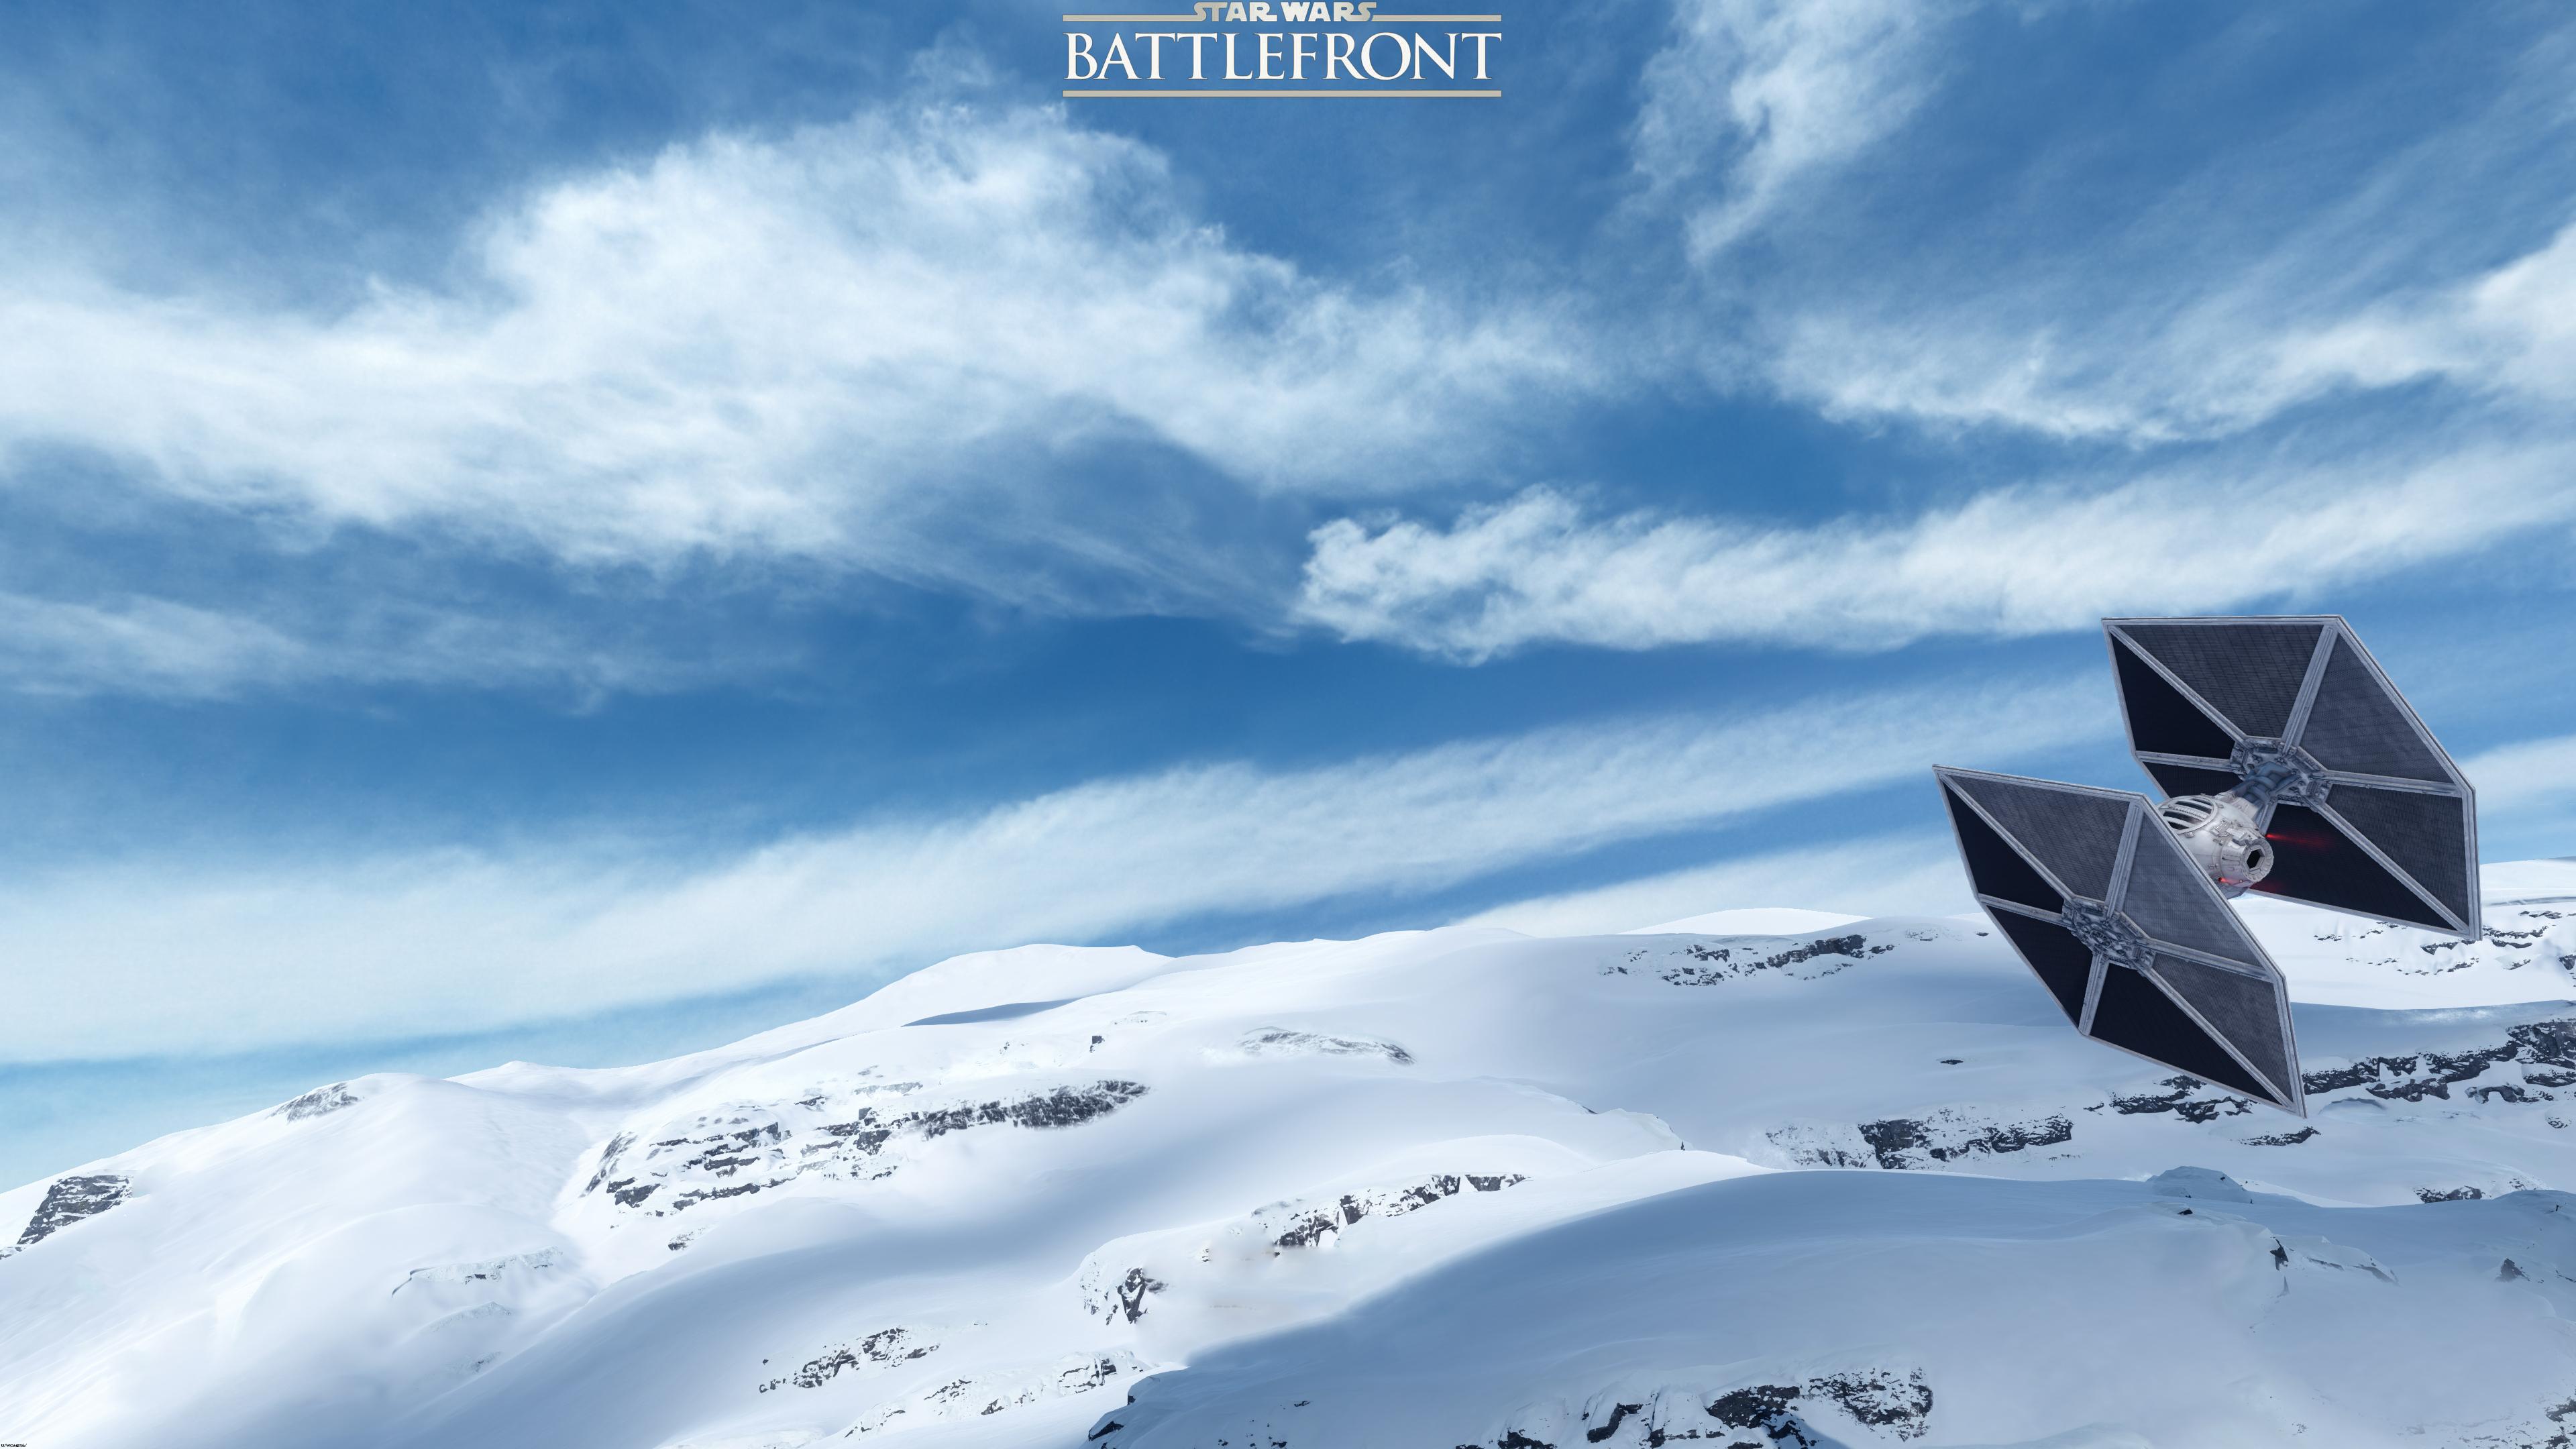  Star Wars Battlefront (2015) Desktop Wallpaper